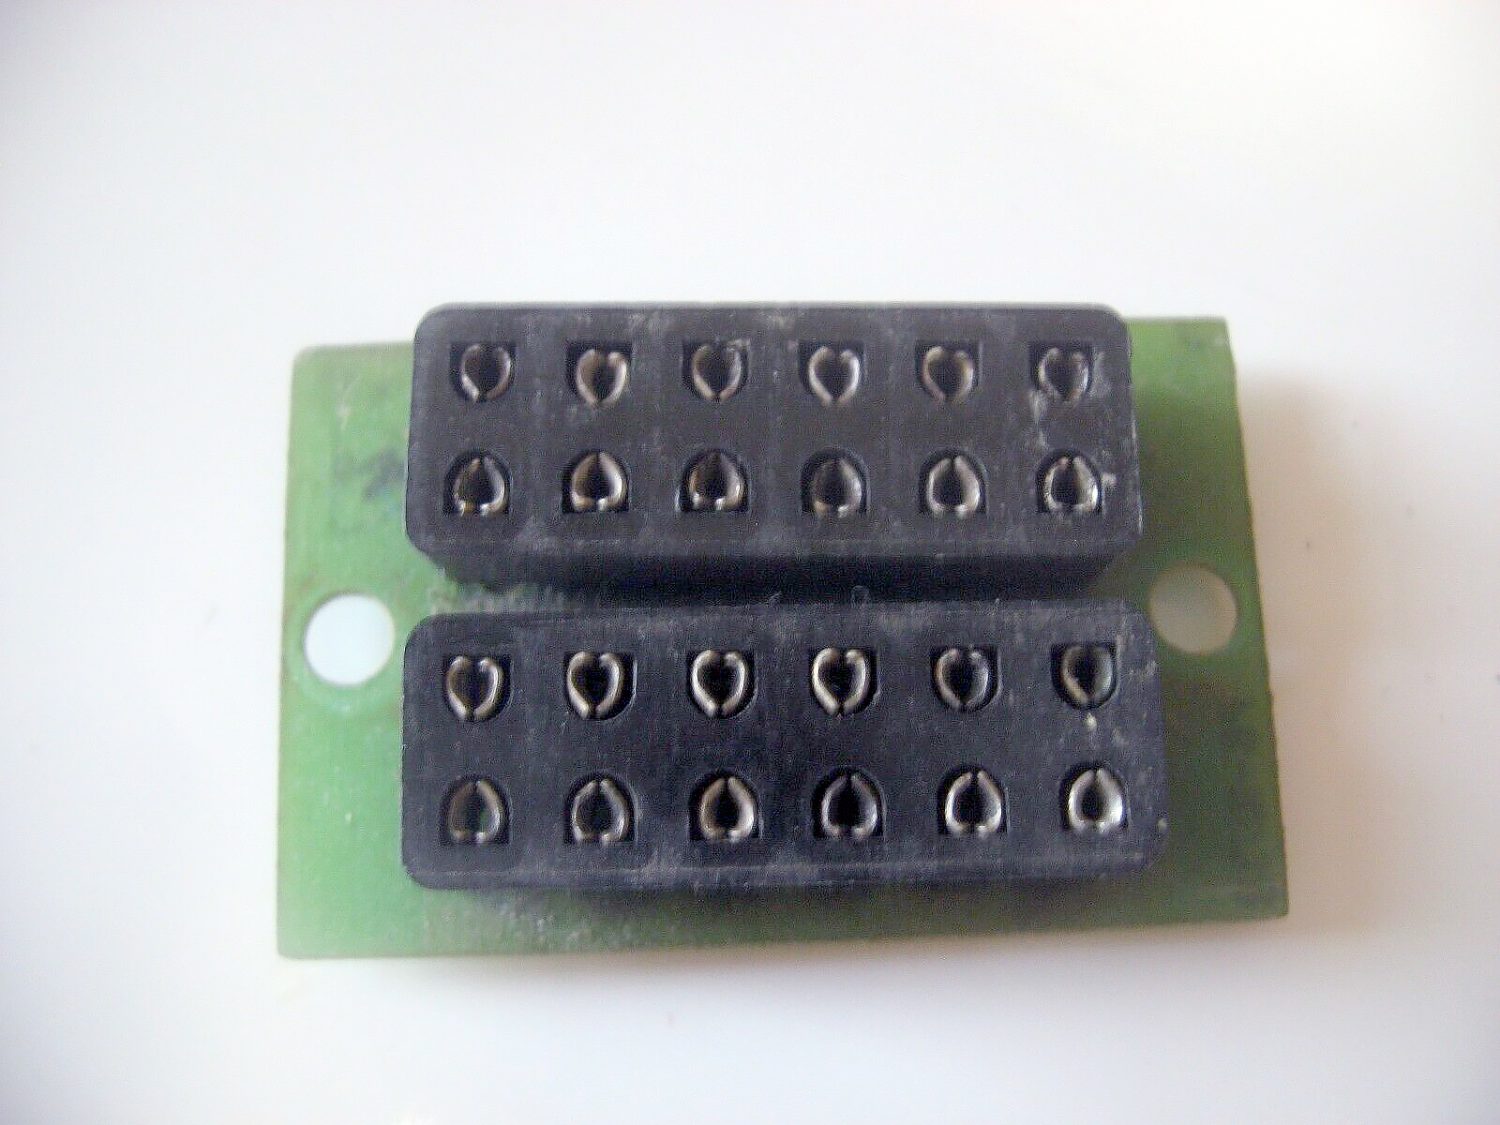 Image of the Crystal Board (PB-1073B)